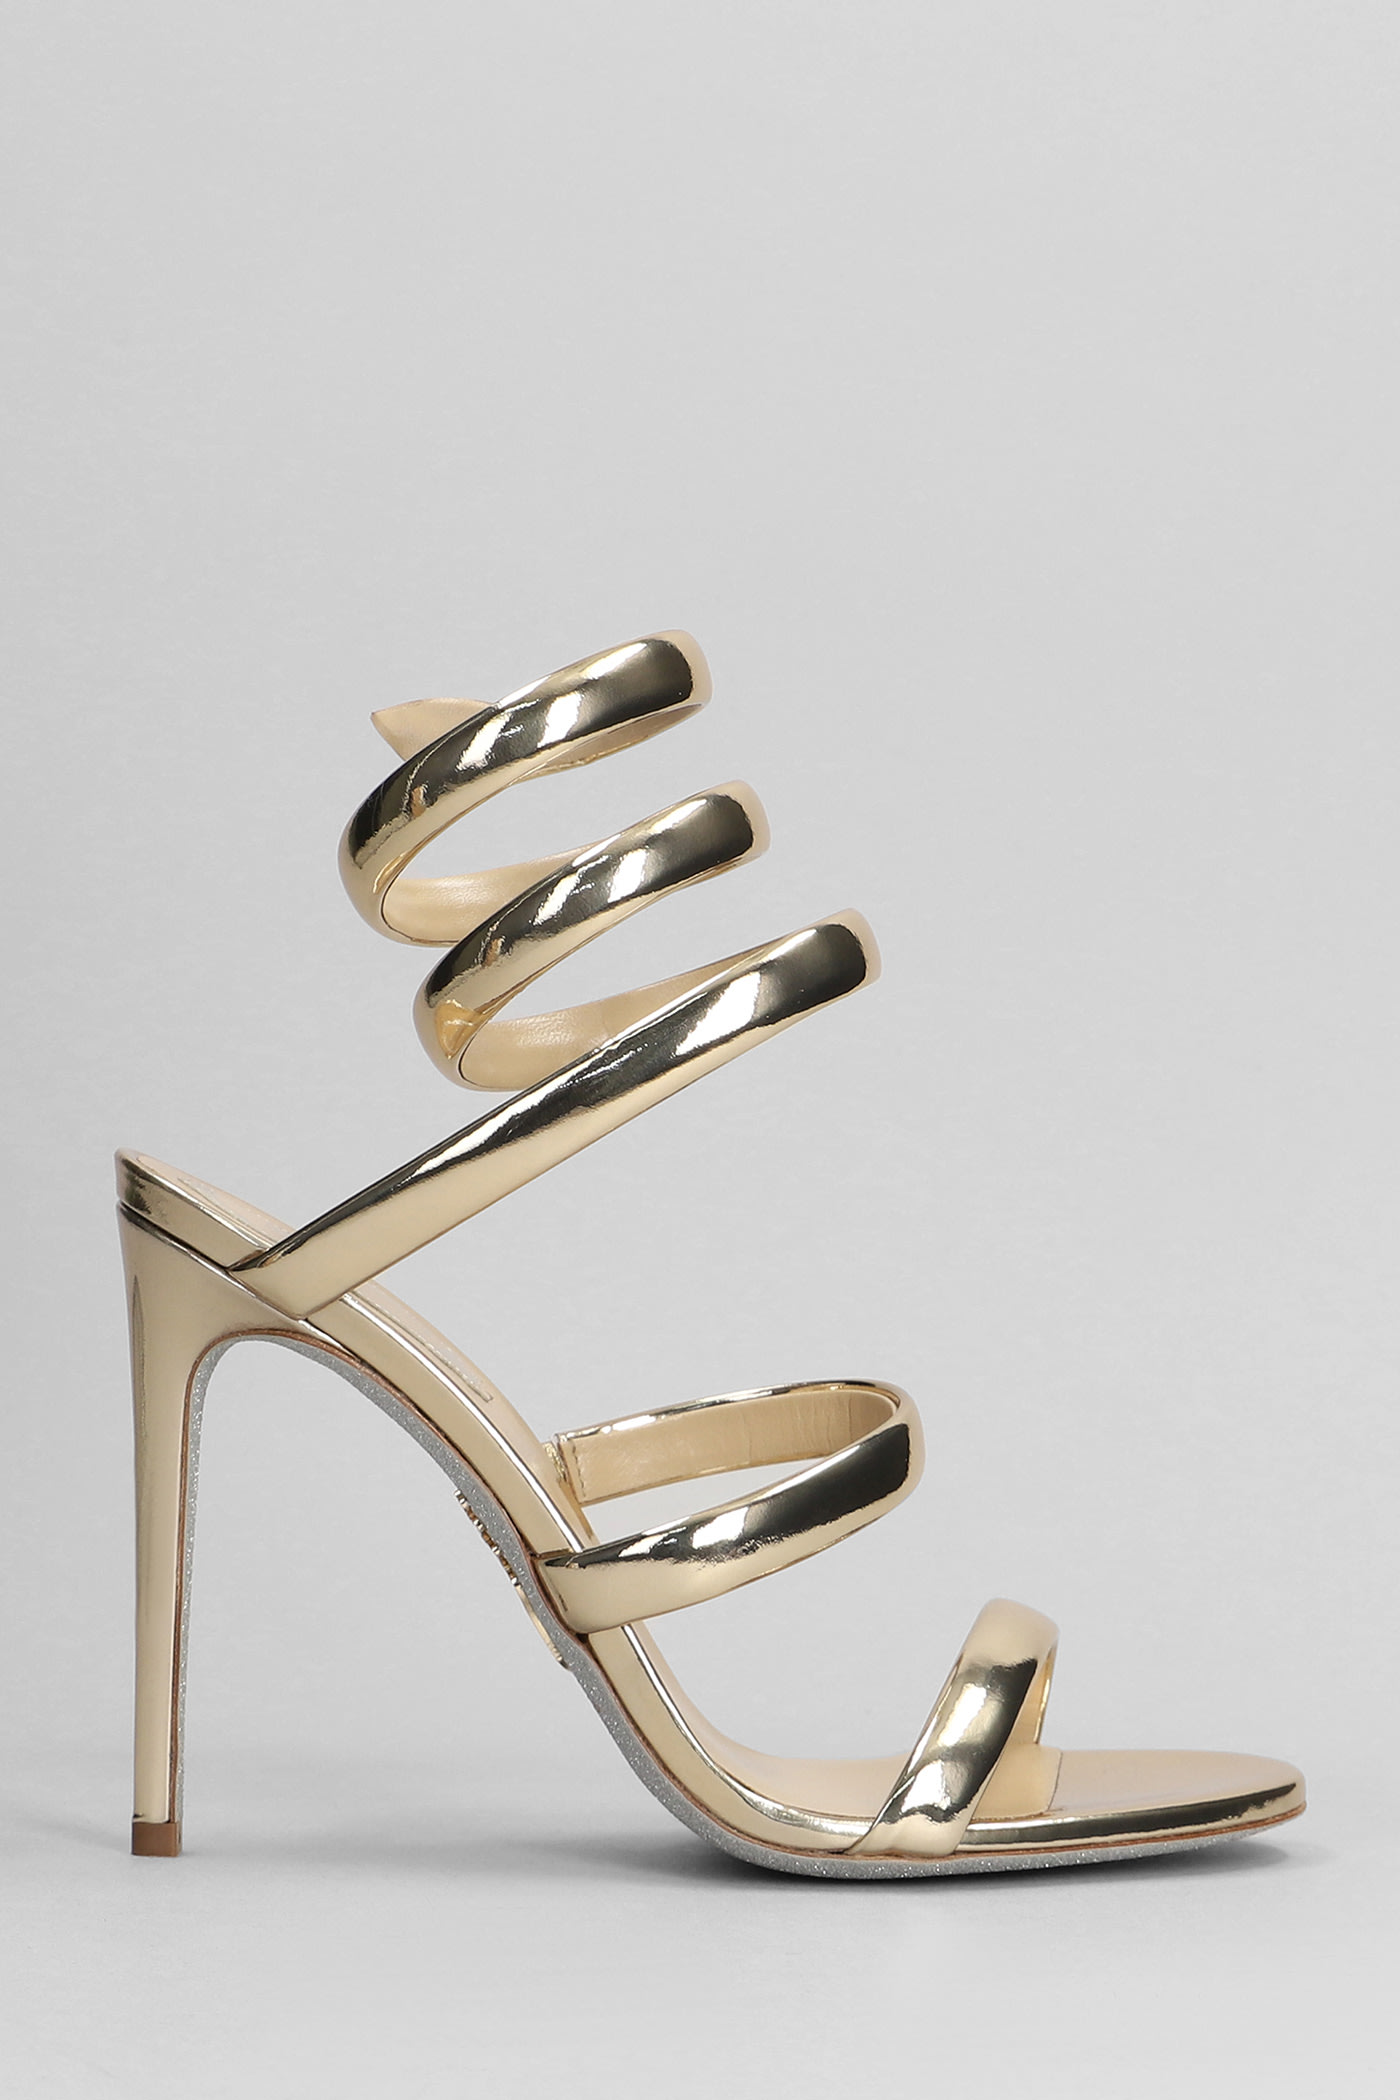 René Caovilla Serpente Sandals In Gold Leather